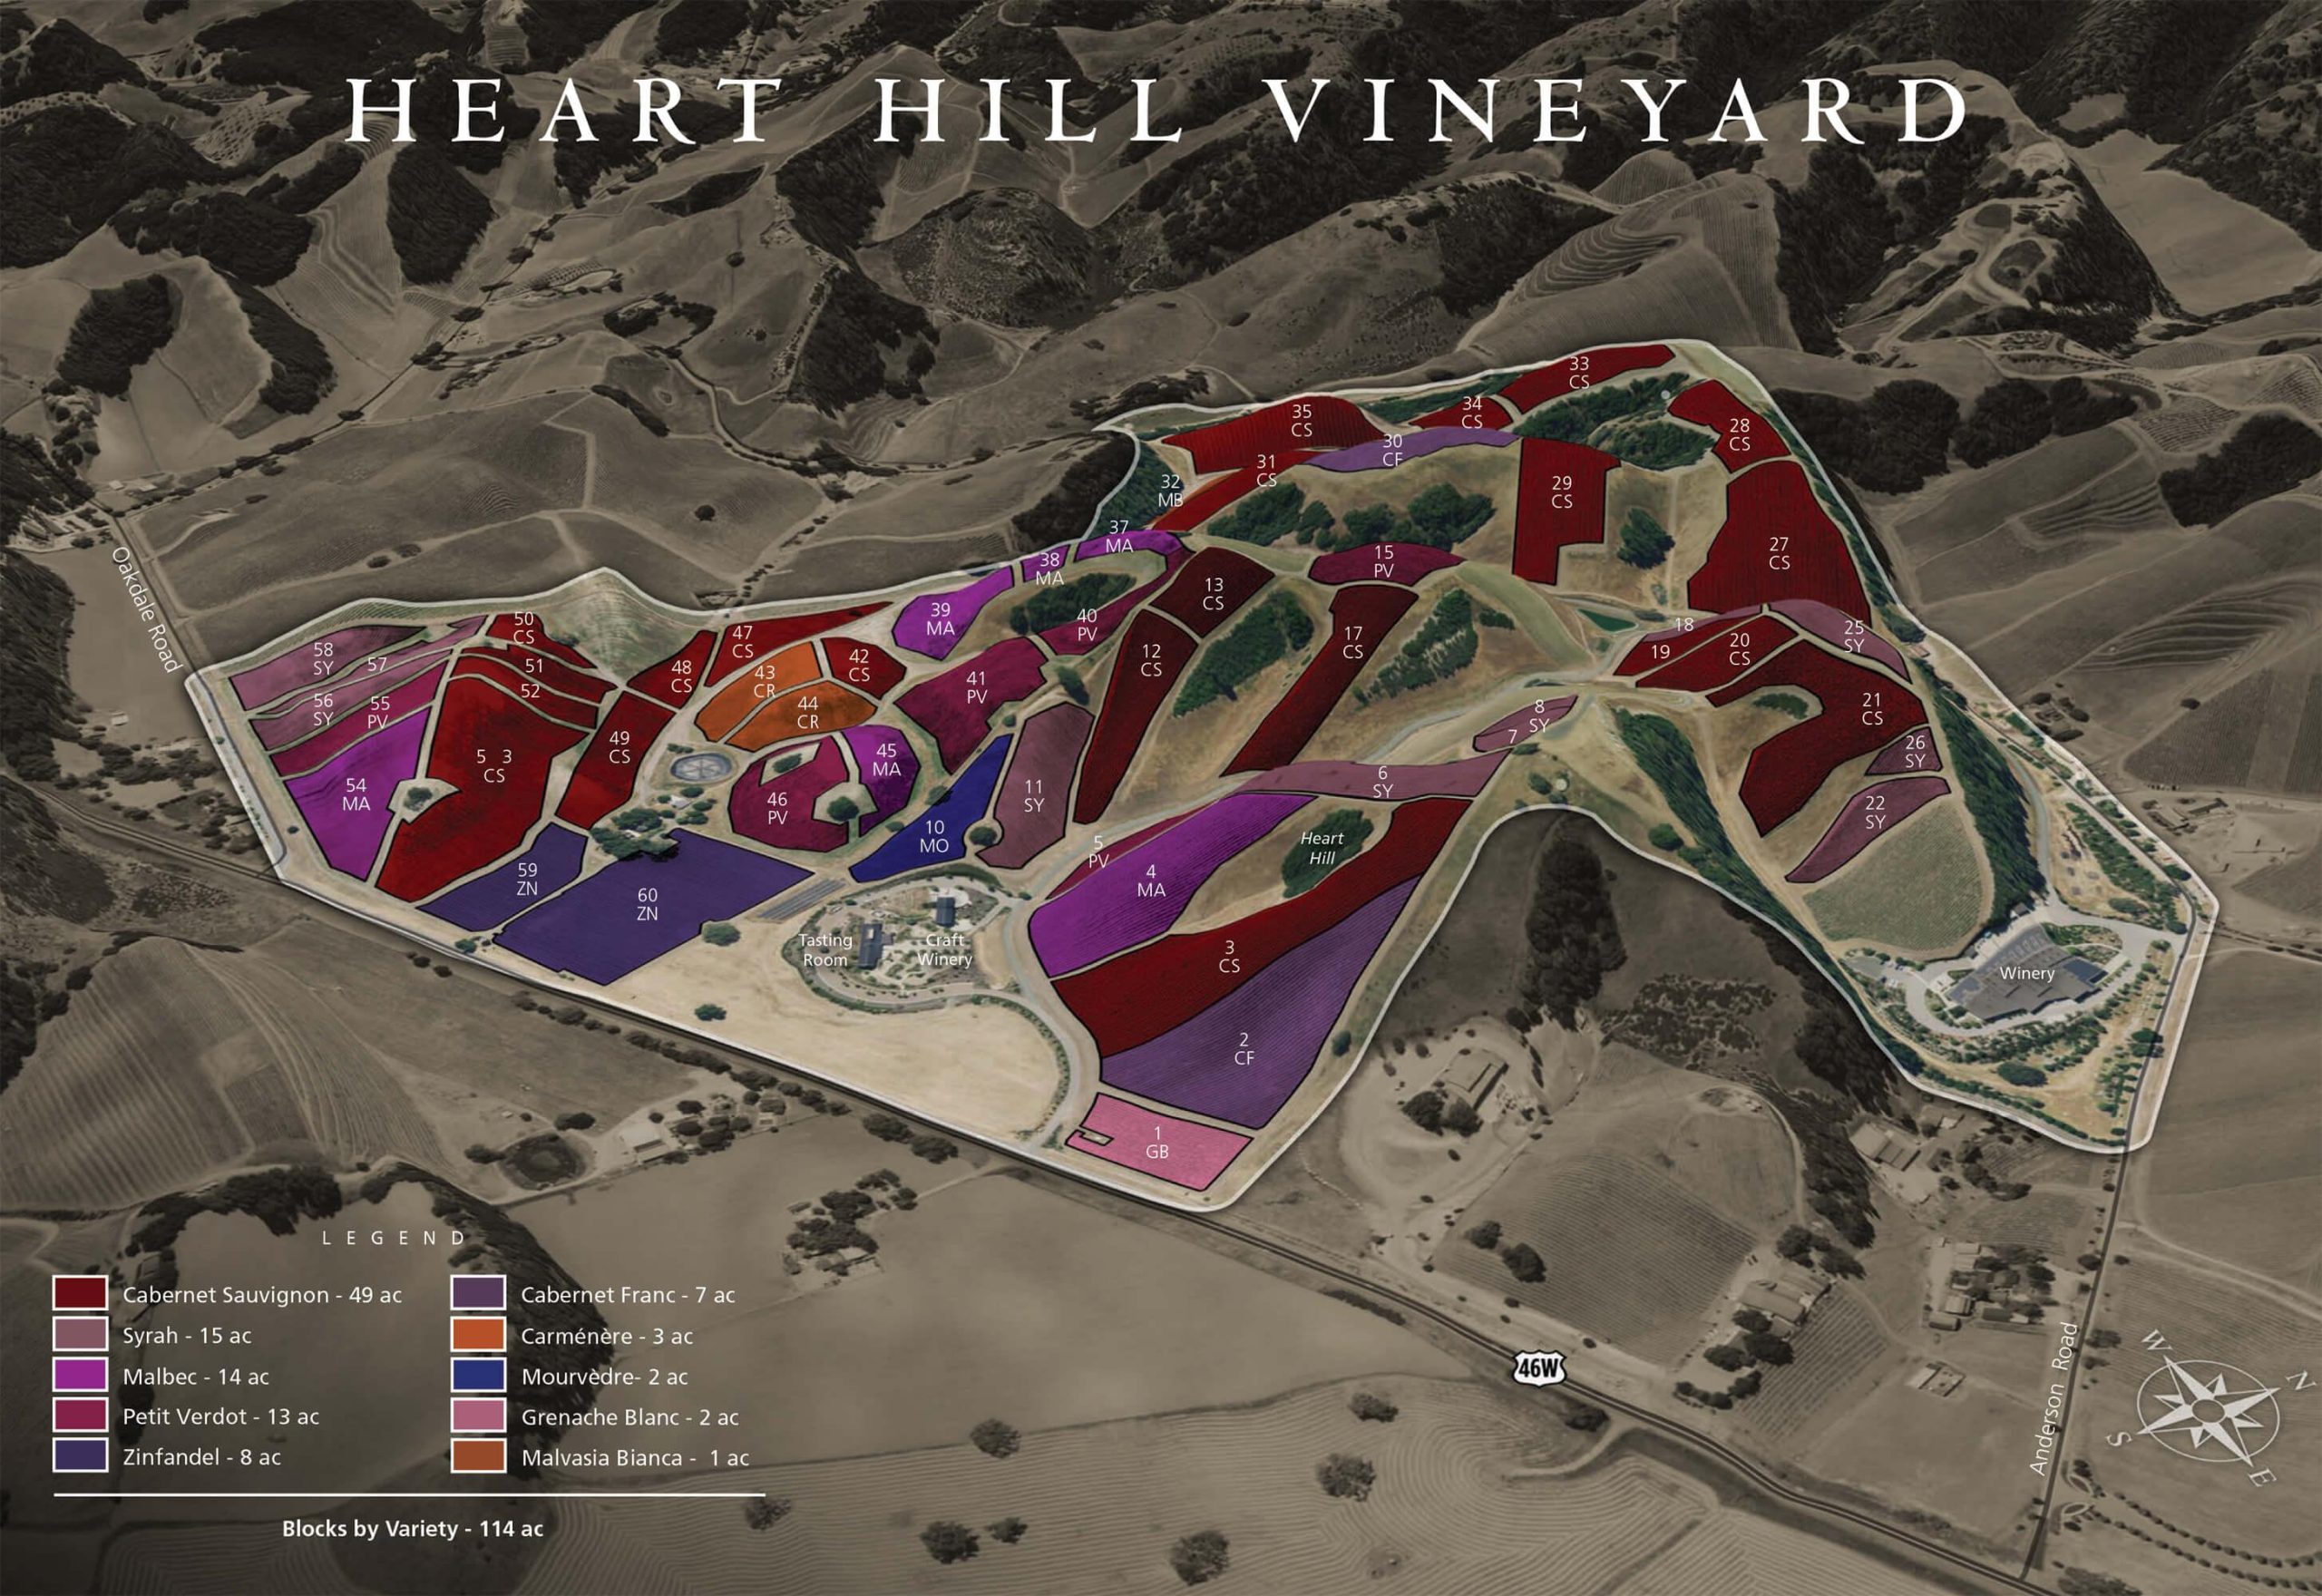 Heart Hill Vineyard map and blocks